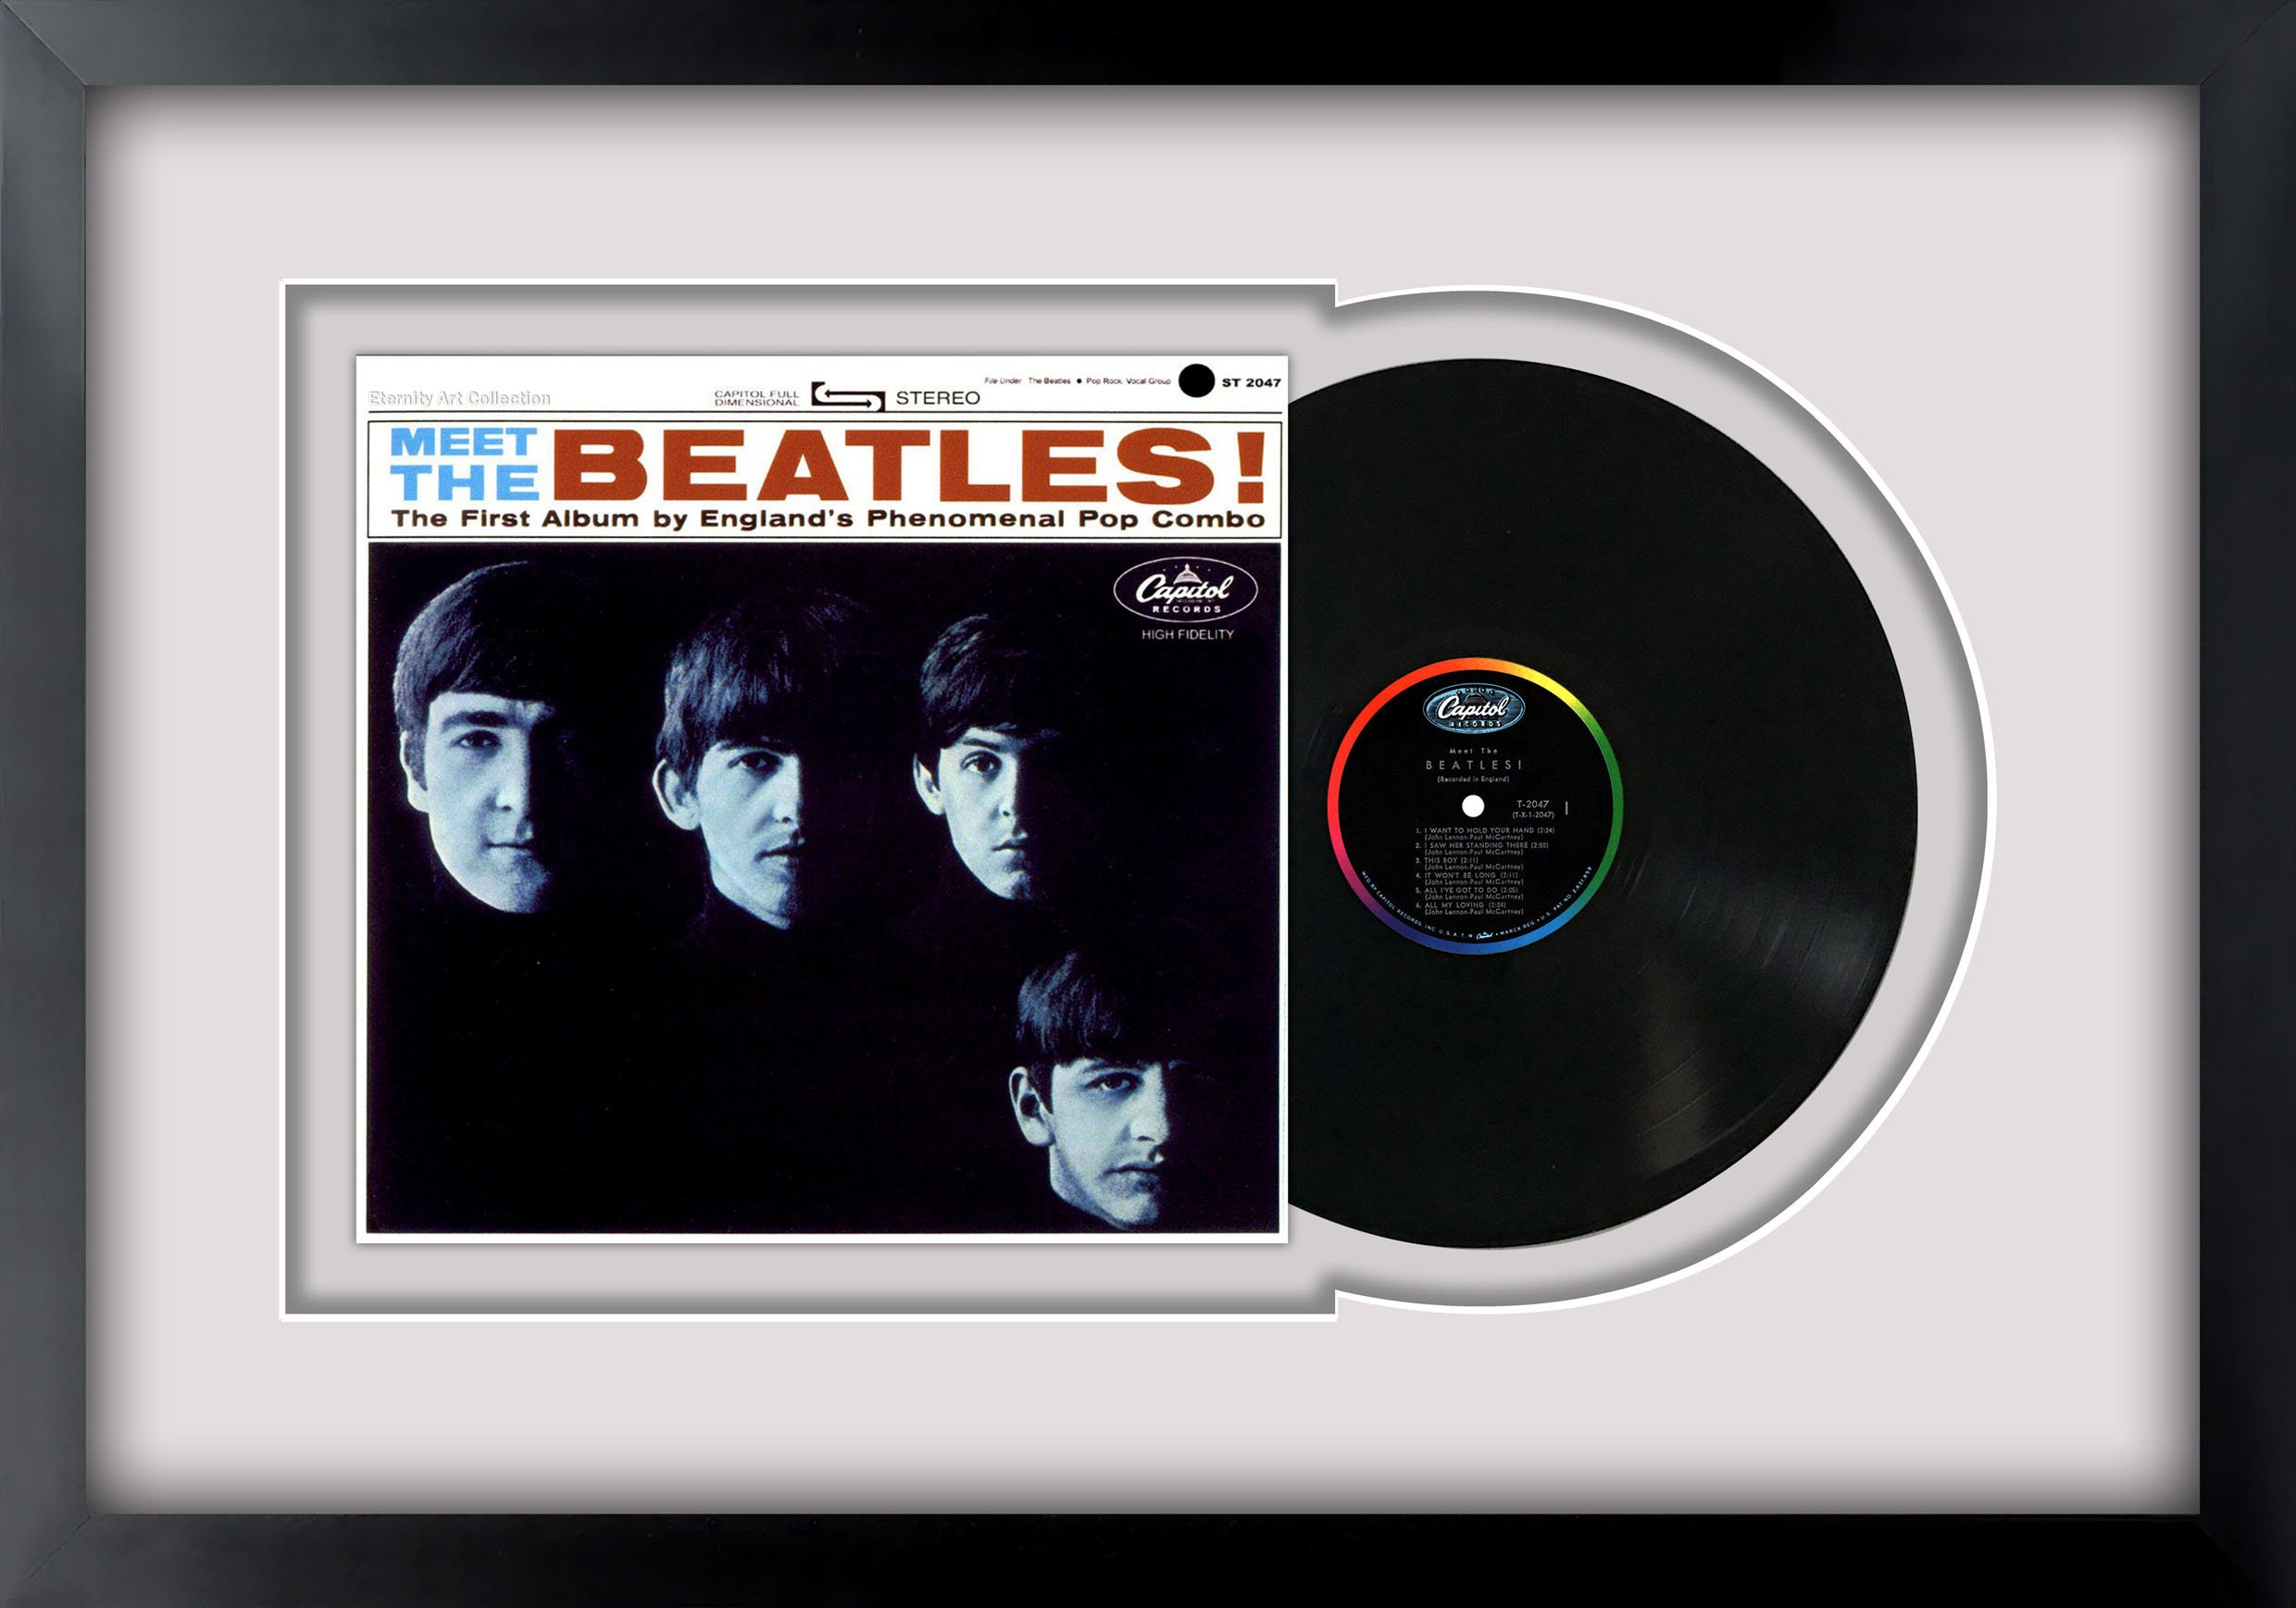 The Beatles Meet the Beatles Lp Vinyl Record by the Beatles, Vinyl LP ...